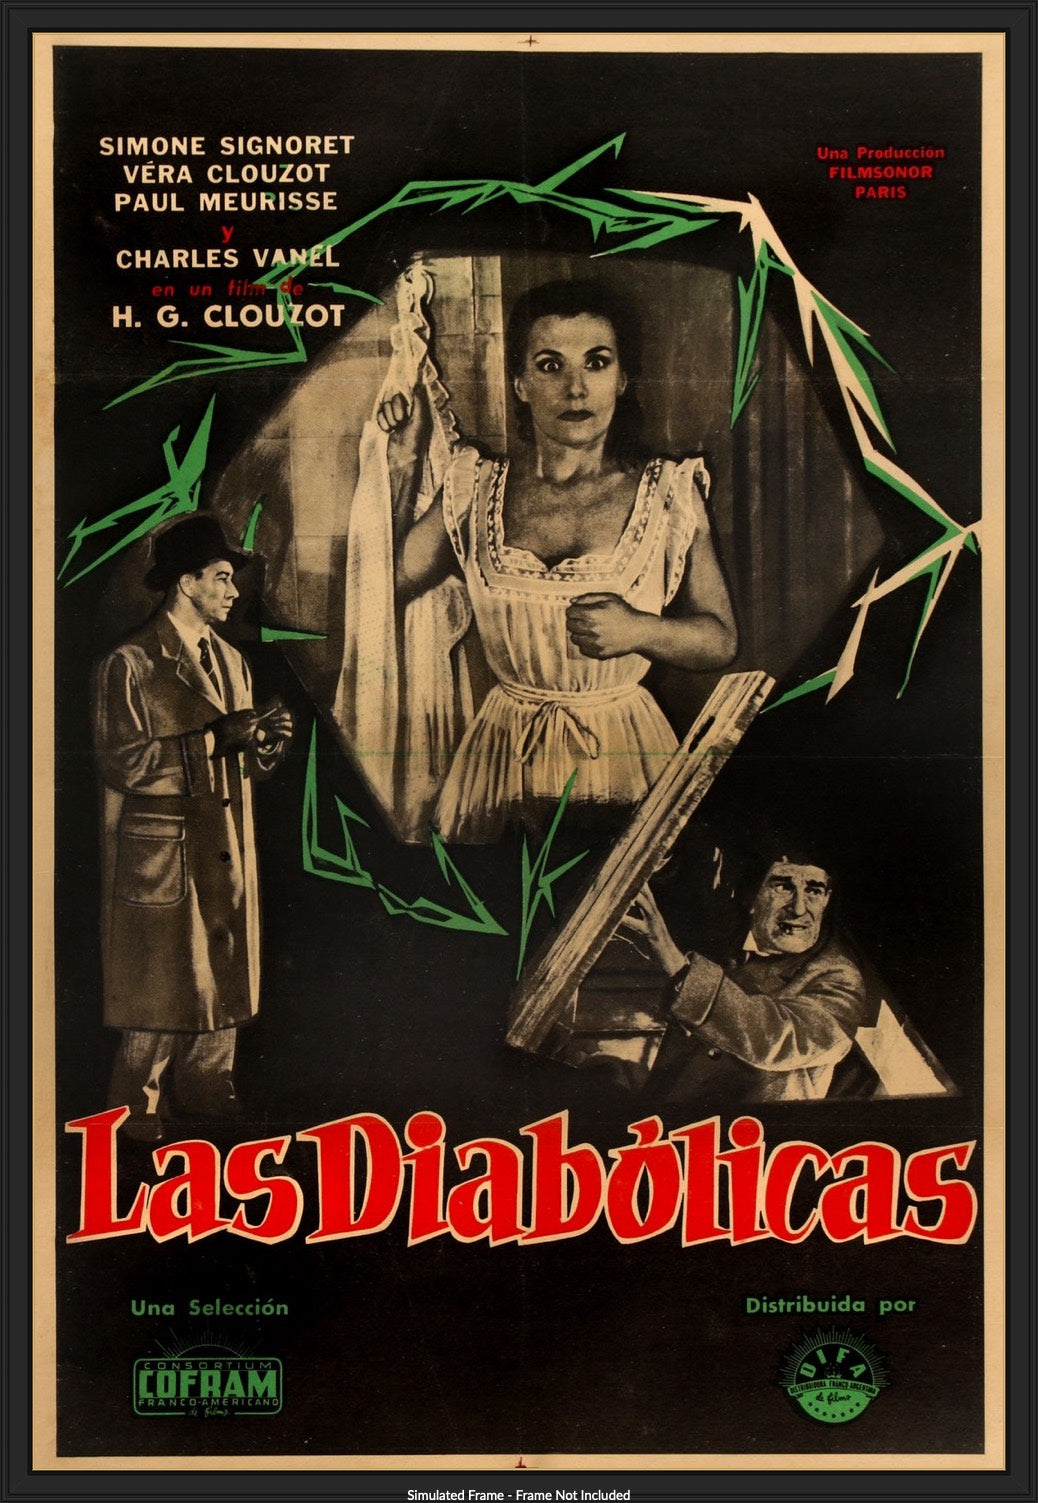 Diabolique (1955) original movie poster for sale at Original Film Art